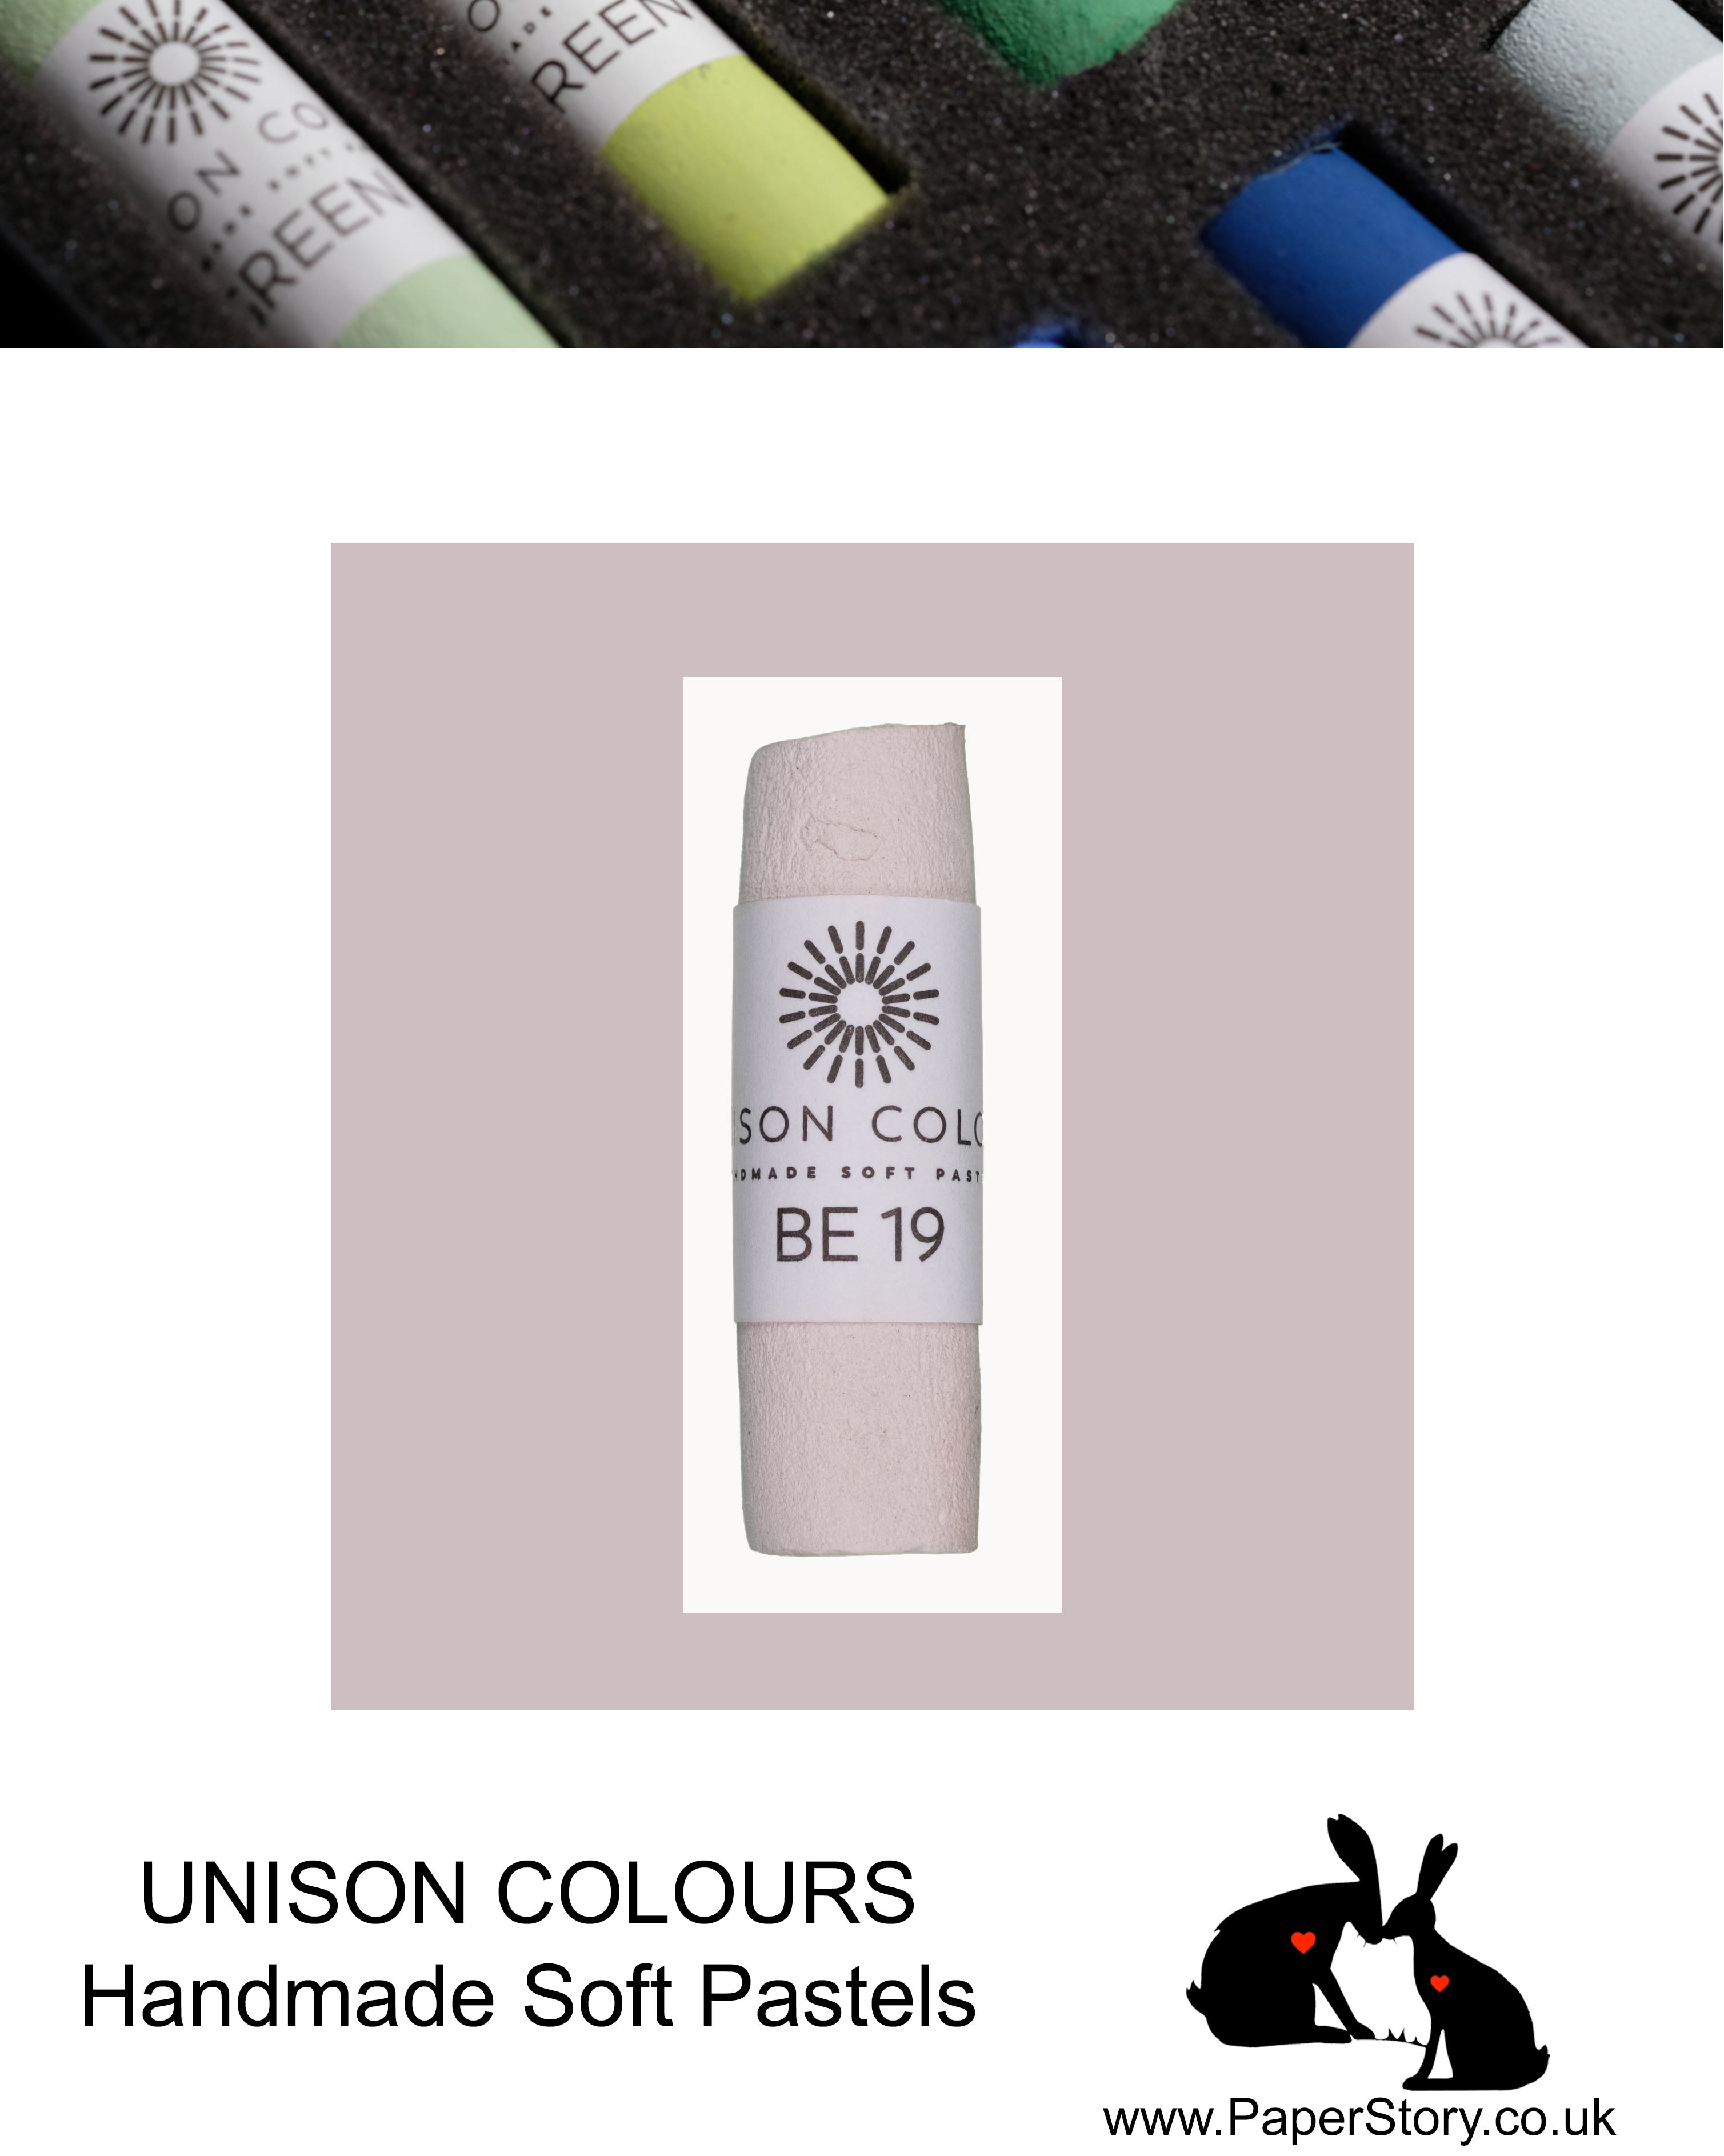 Unison Colour Handmade Soft Pastels Brown Earth 19 - Size Regular